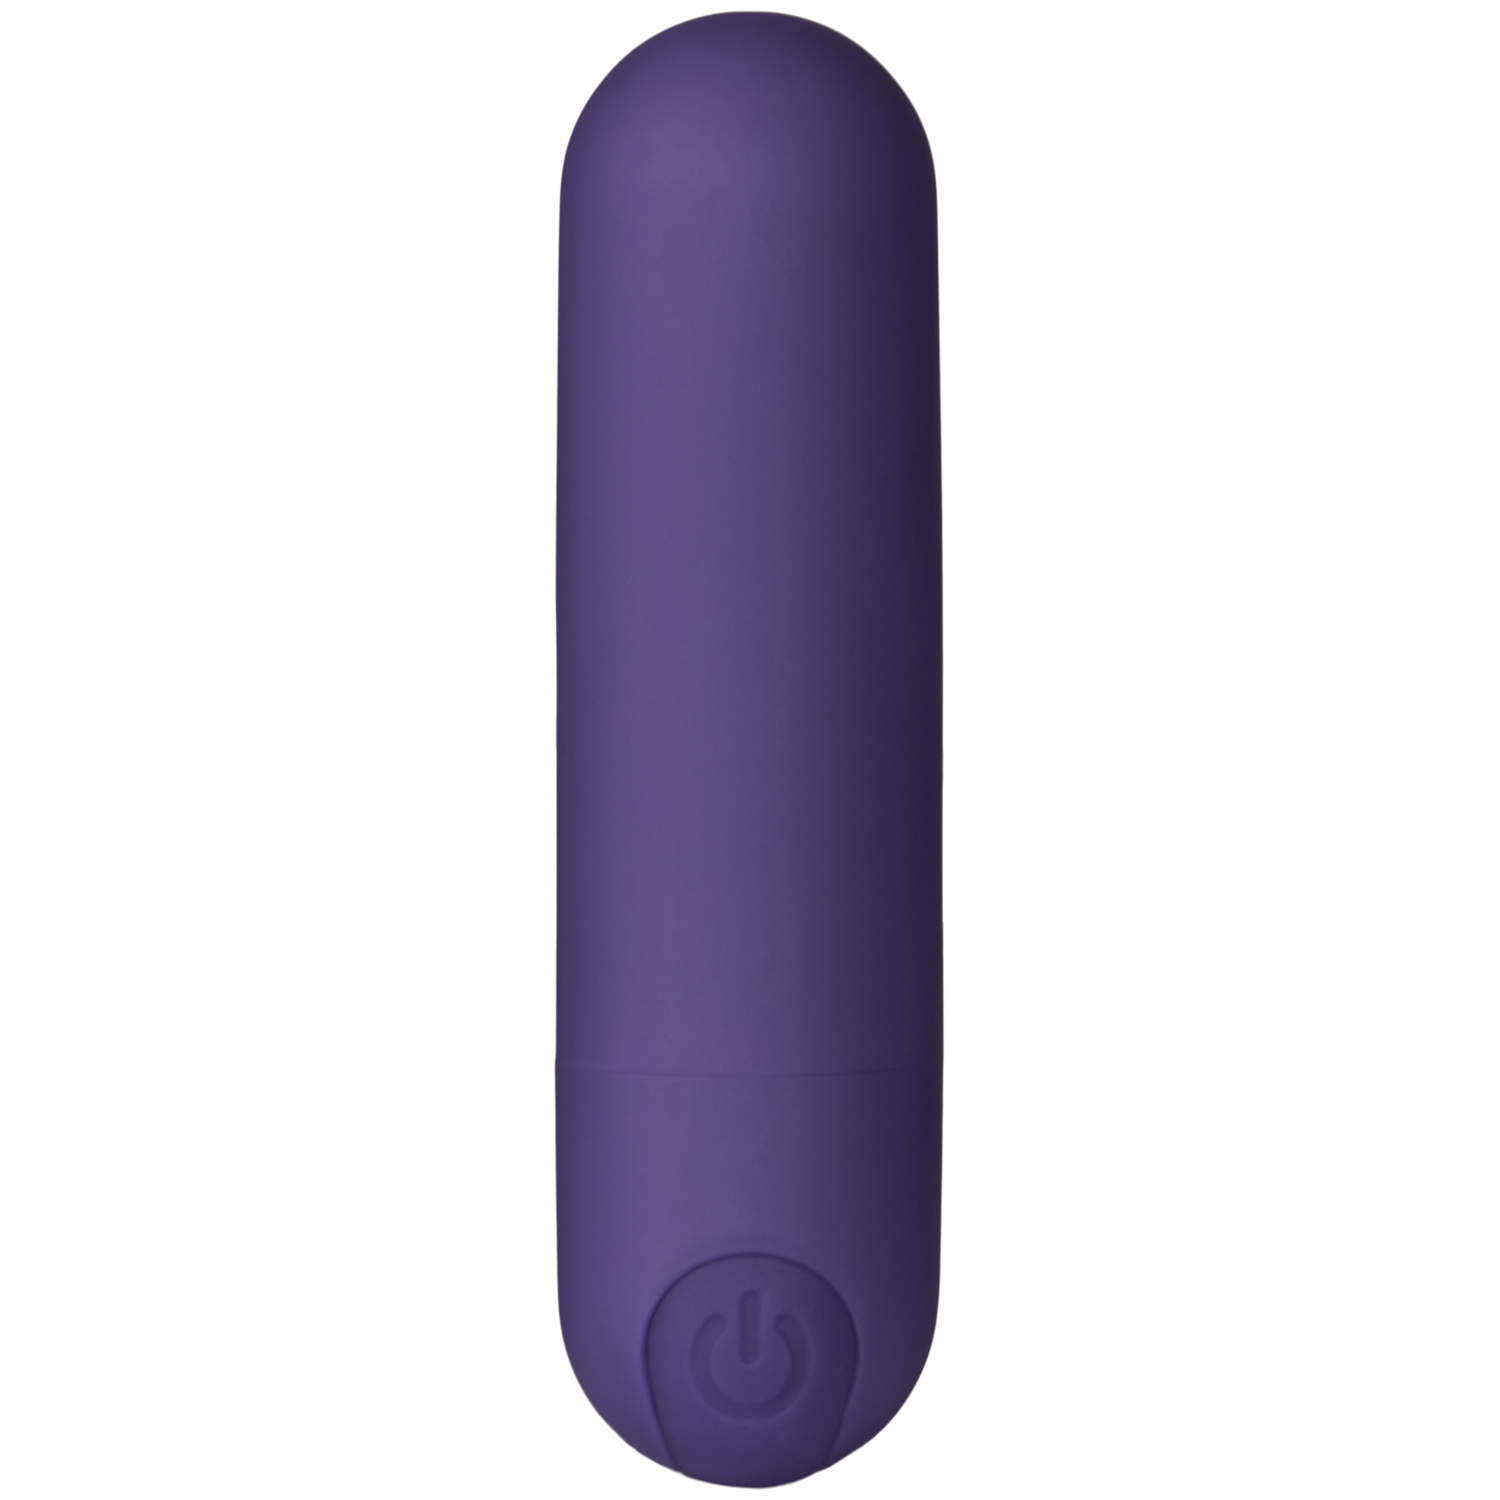 Sinful Passion Purple Opladelig PowerBullet Vibrator     - Purple